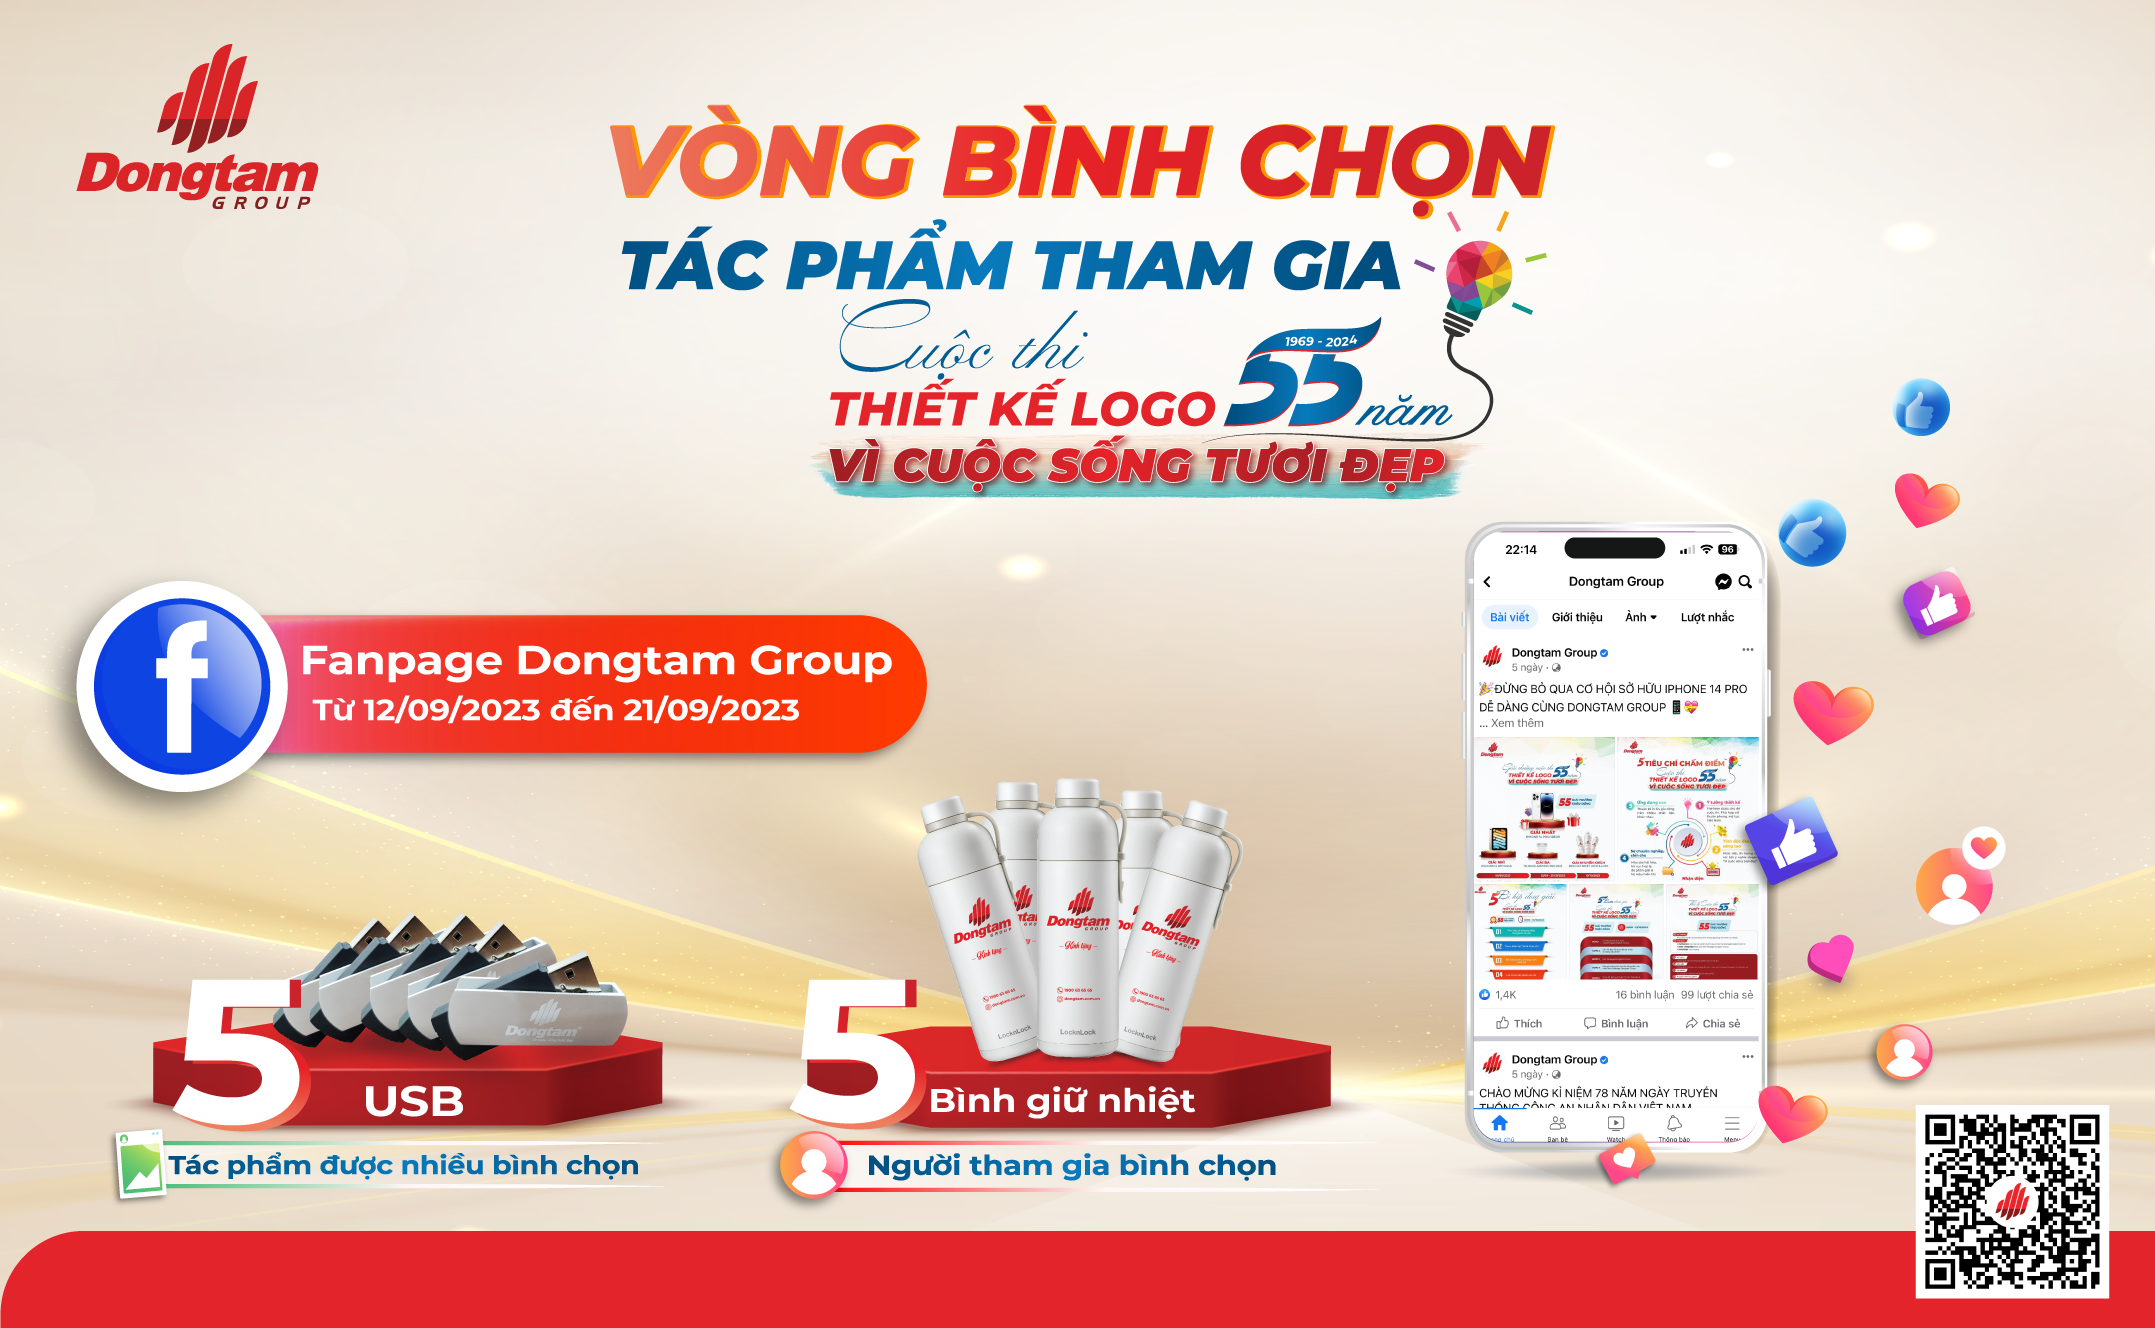 Cuoc thi thiet ke logo 55 nam Dongtam Group Vong binh chon Web Hinh trong